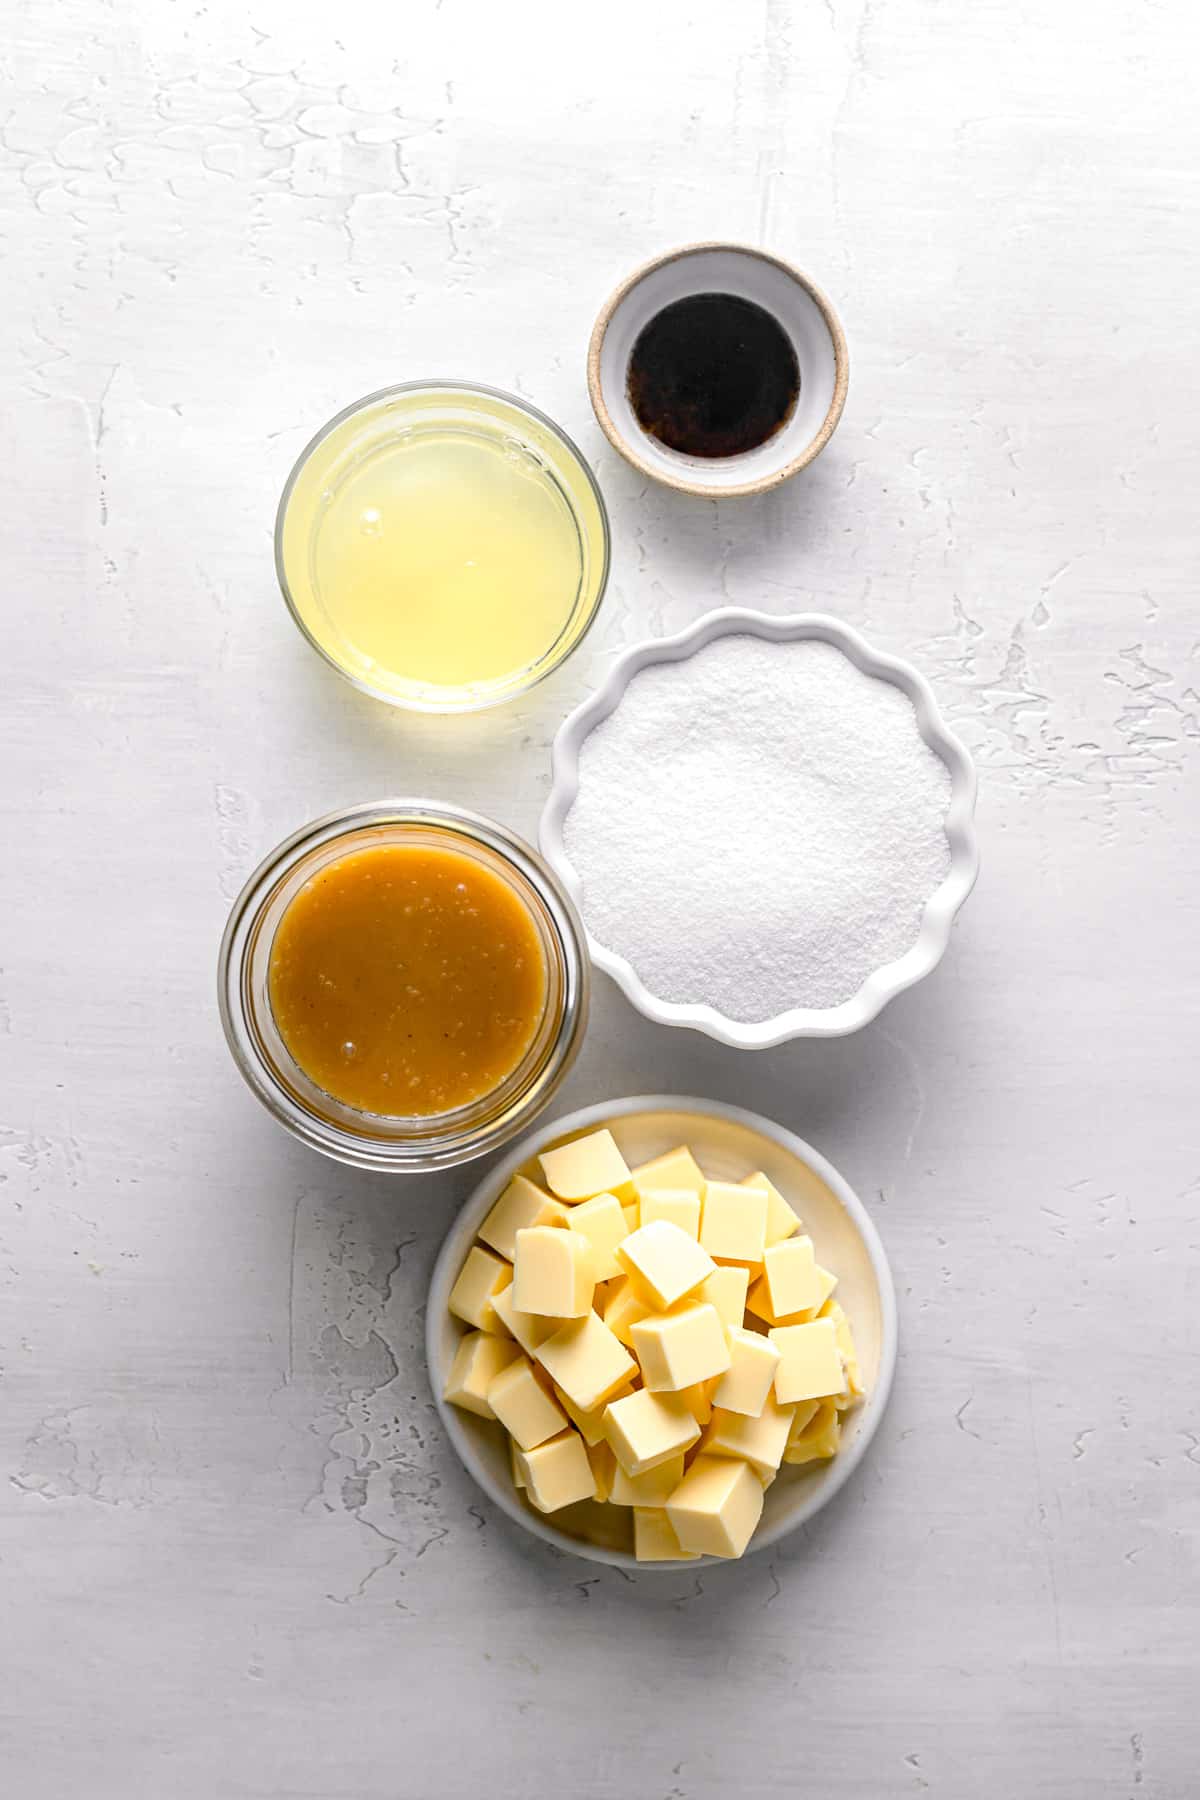 ingredients for the caramel swiss meringue buttercream.